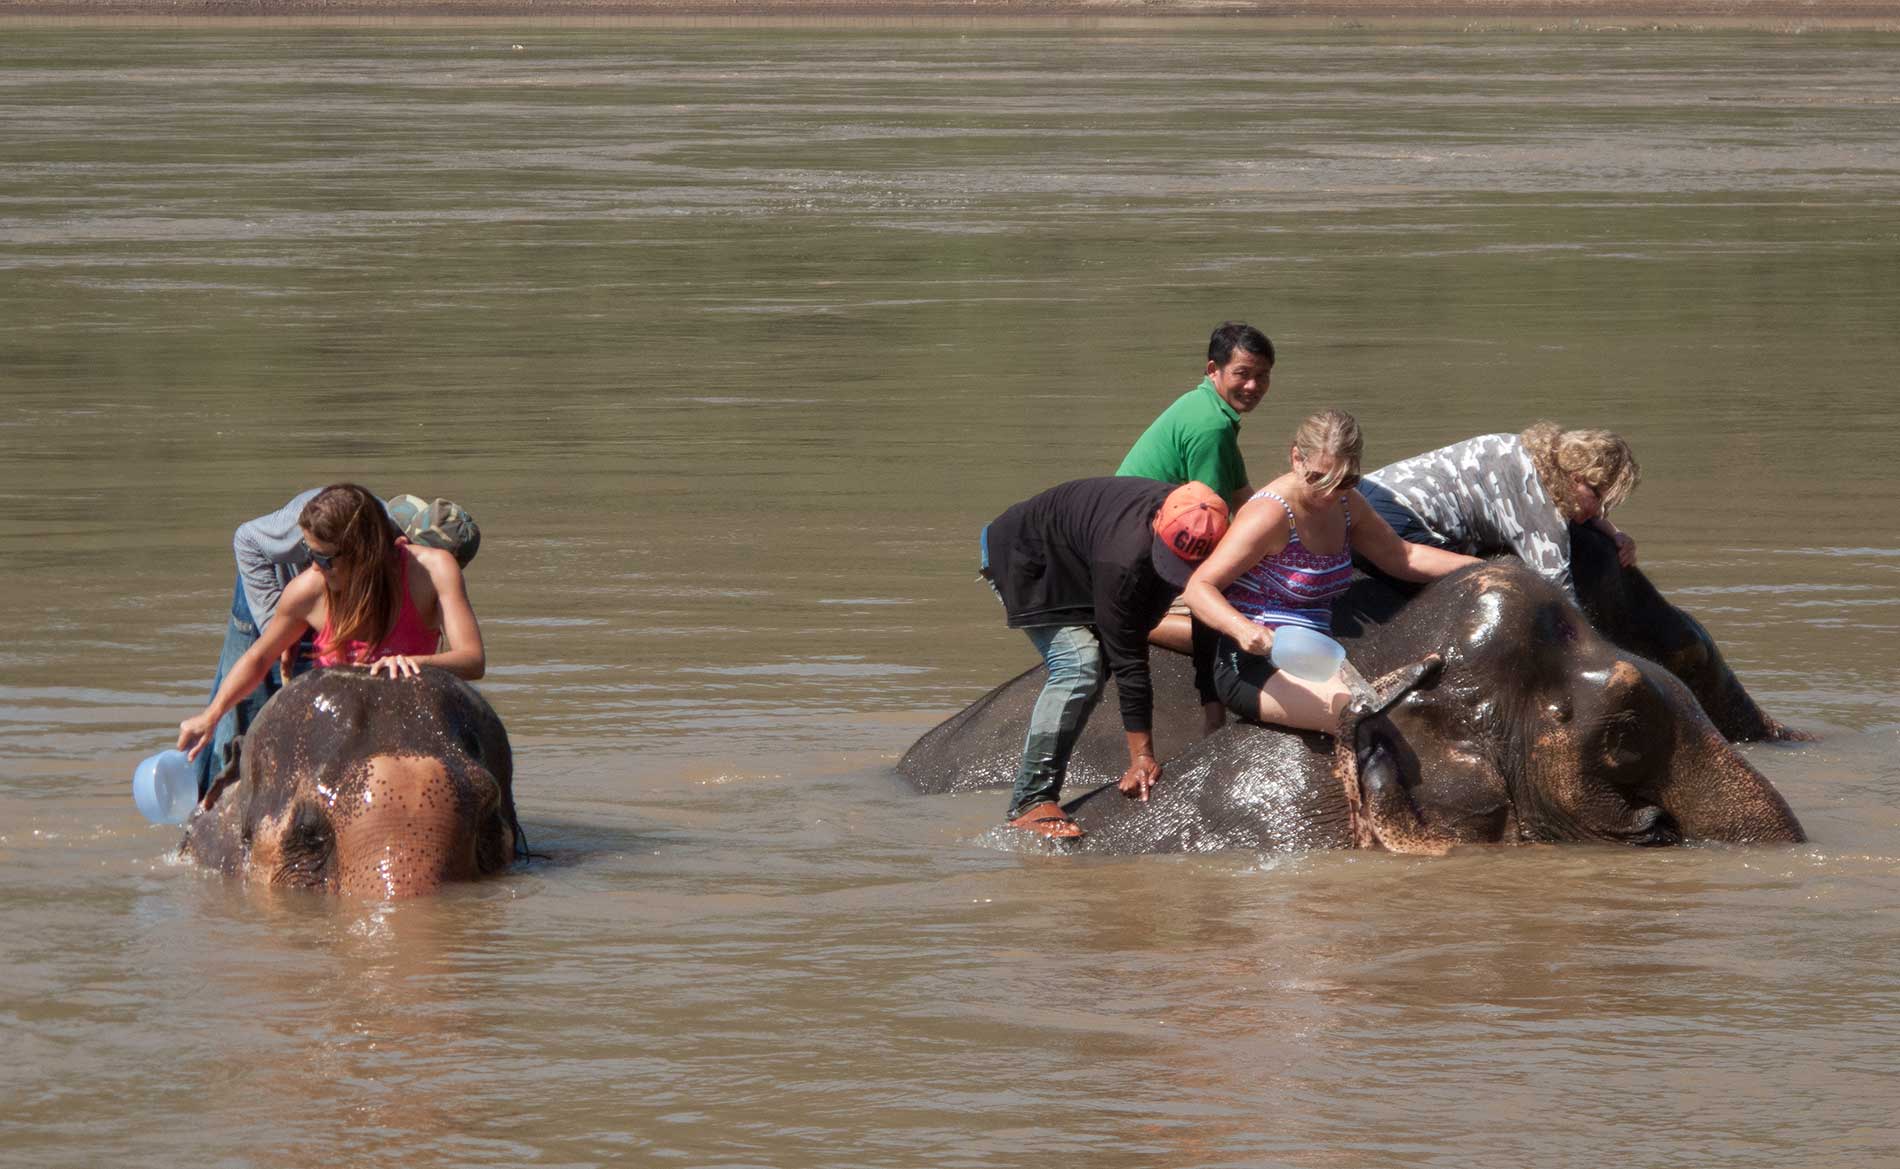 Washing the elephants. Laos